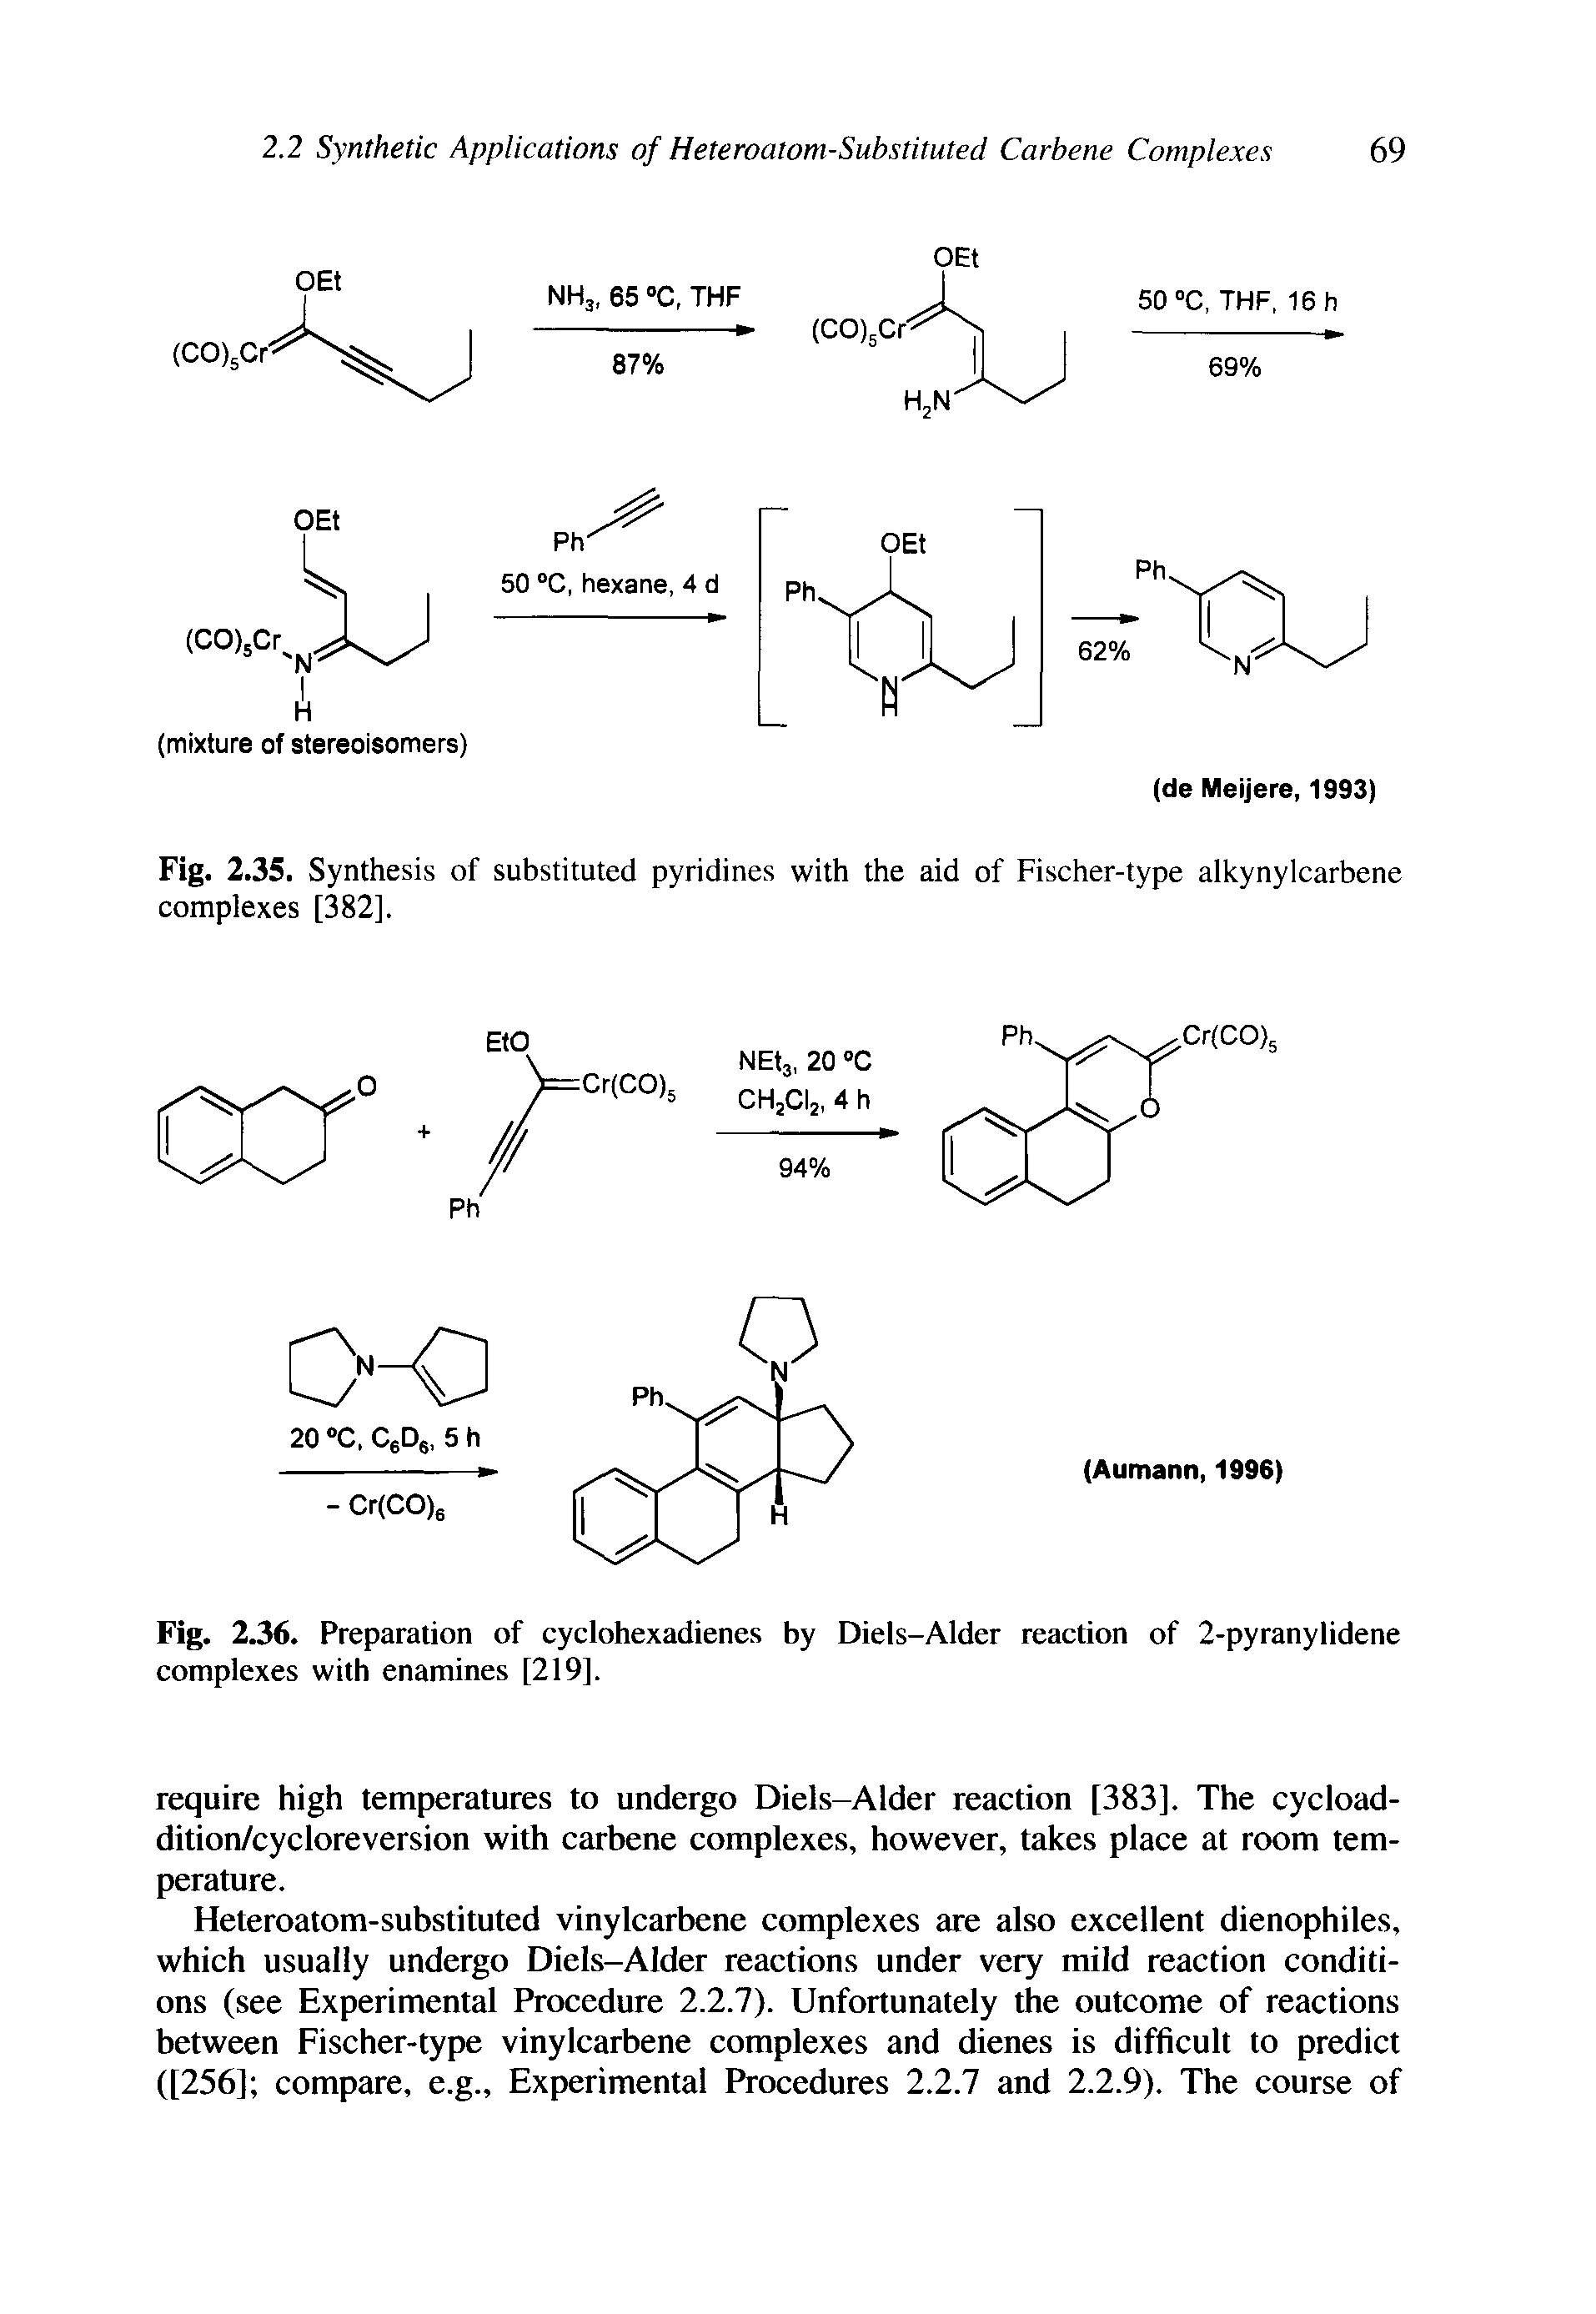 Fig. 2.36. Preparation of cyclohexadienes by Diels-Alder reaction of 2-pyranylidene complexes with enamines [219].